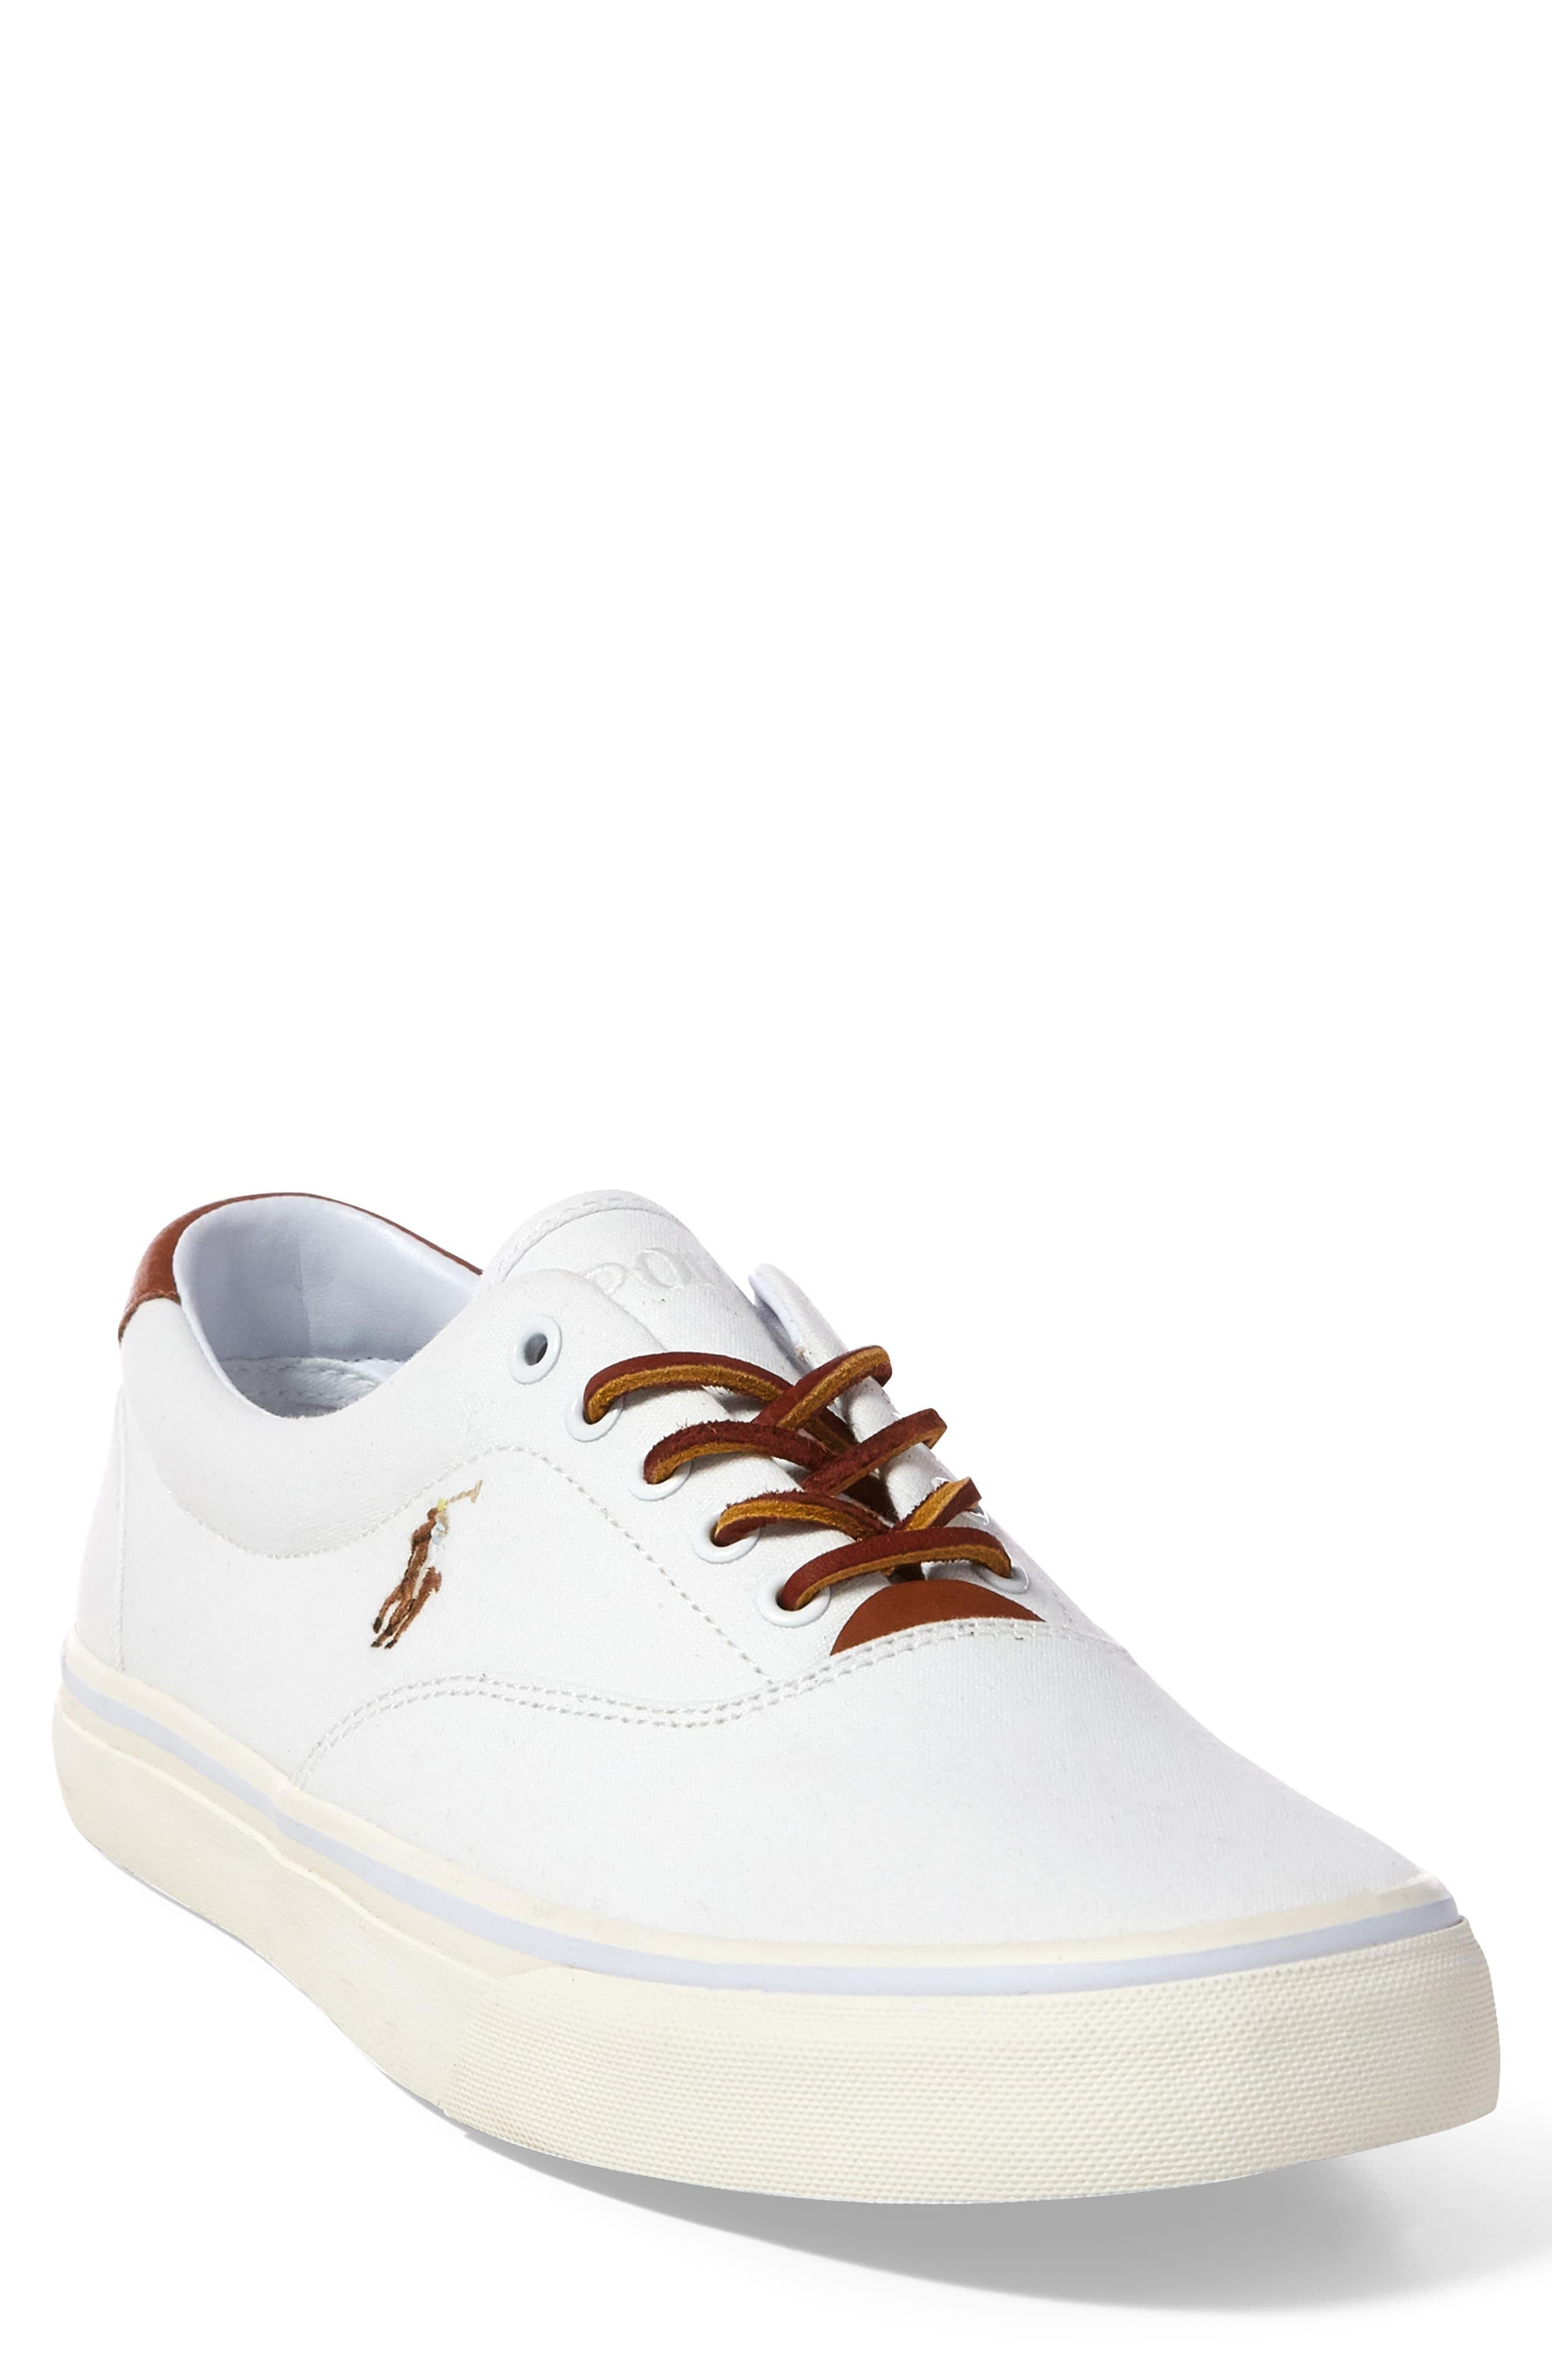 Polo Ralph Lauren Canvas Thorton Sneaker in White for Men - Save 31% - Lyst